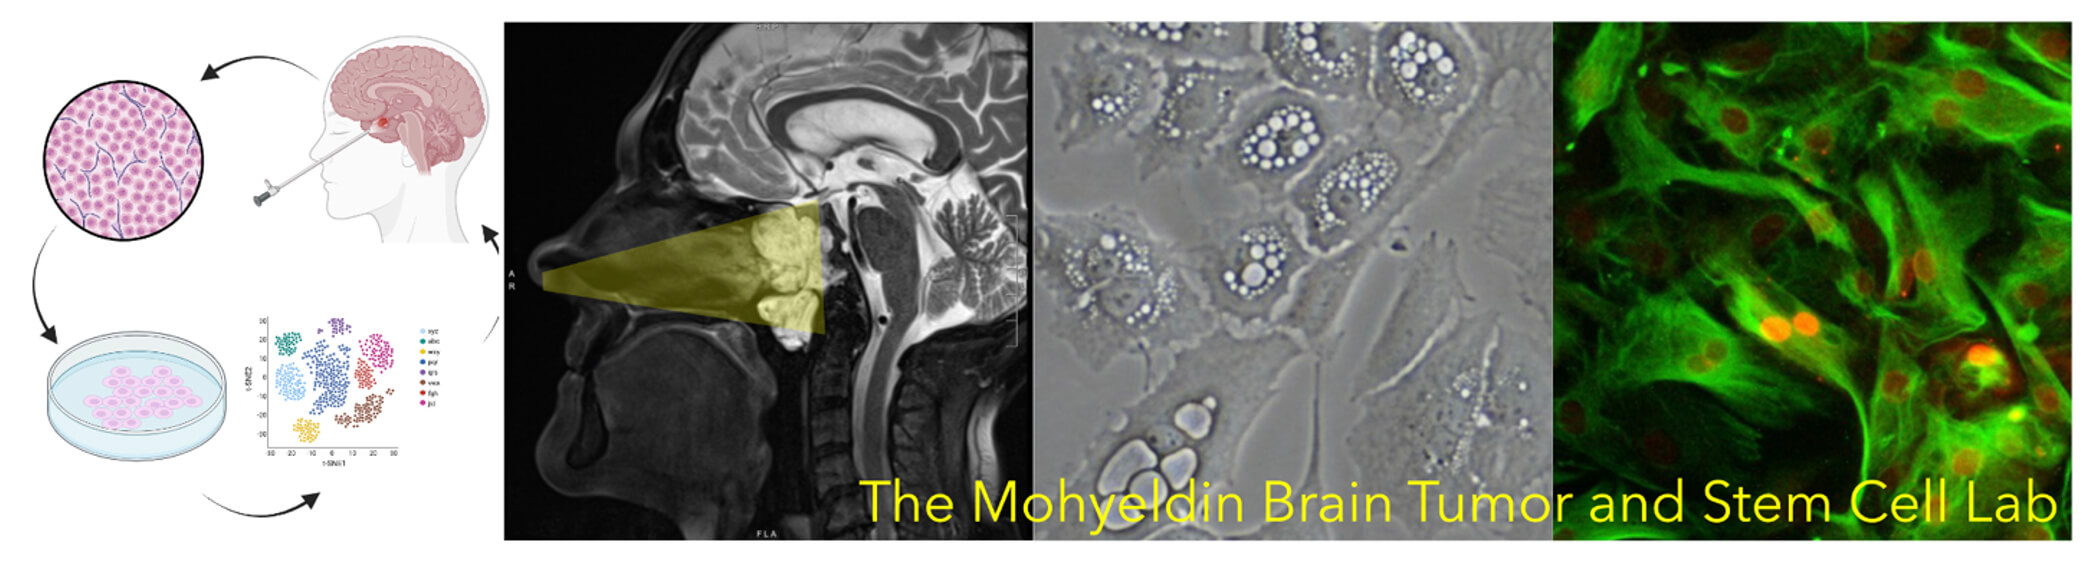 The Mohyeldin brain tumor research lab